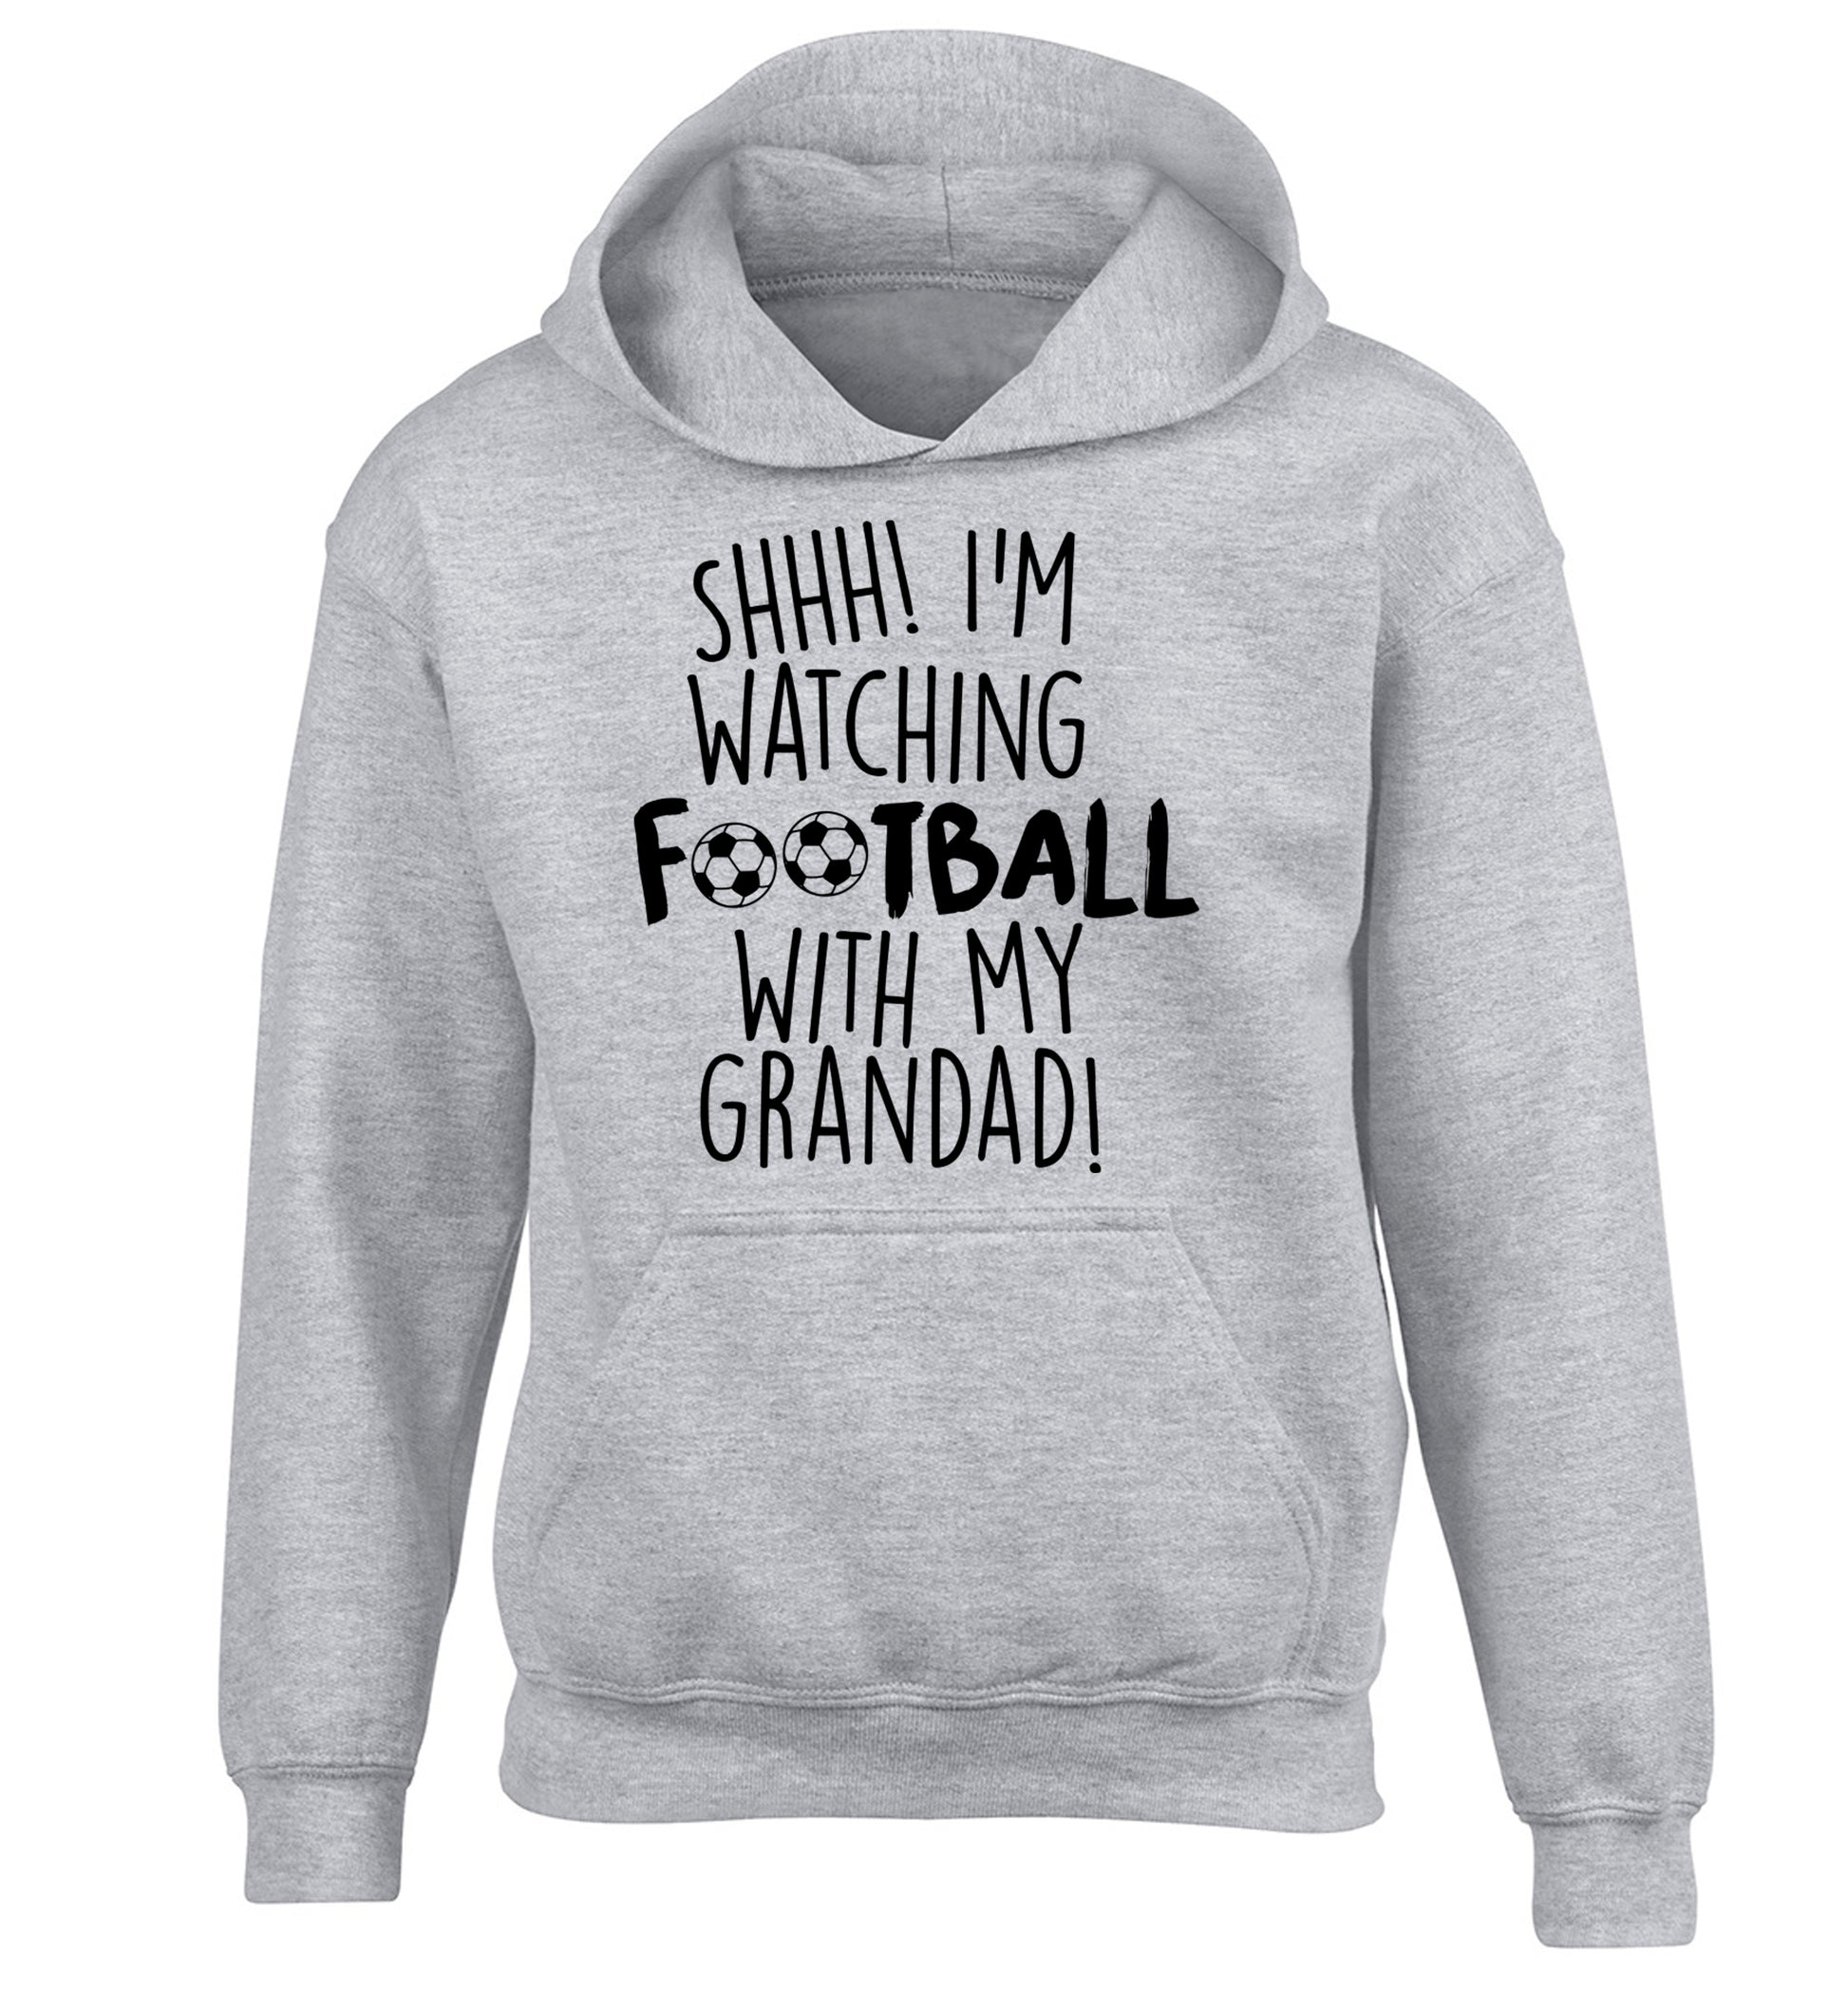 Shhh I'm watching football with my grandad children's grey hoodie 12-14 Years